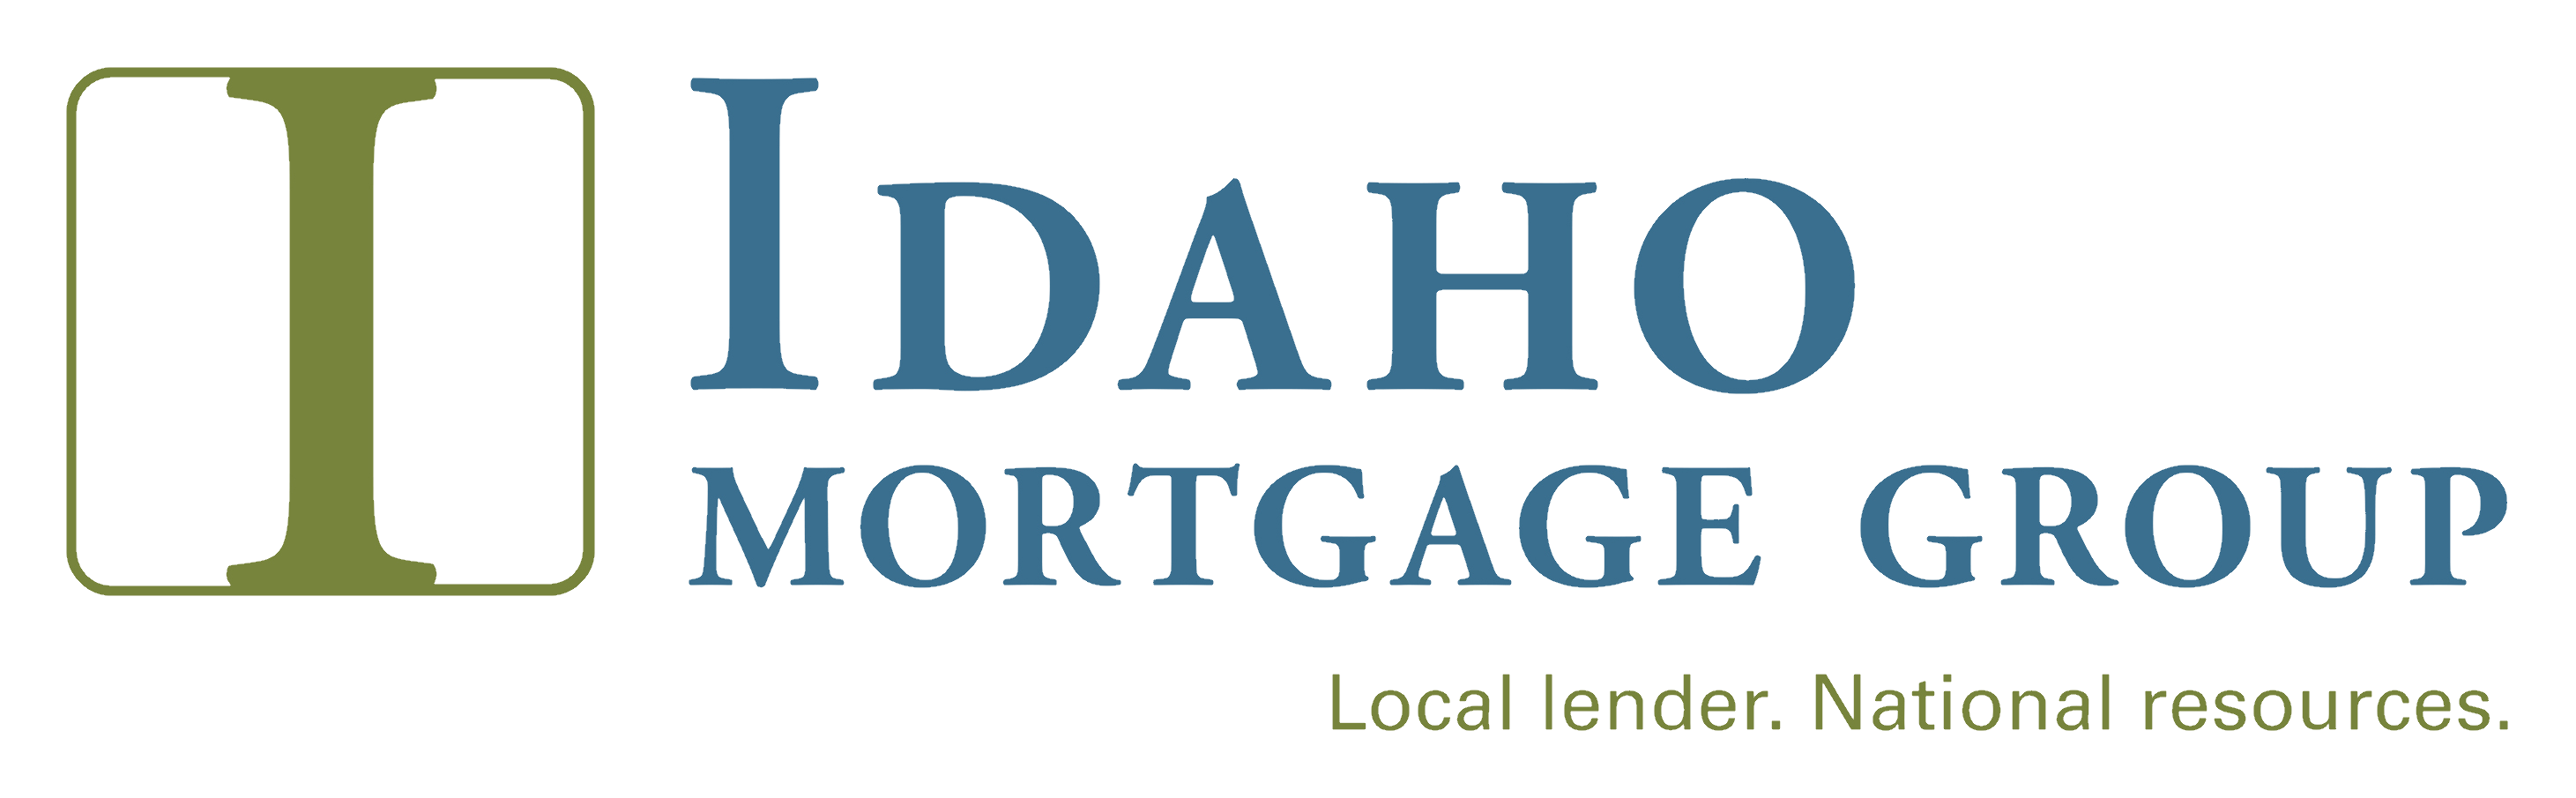 Idaho Mortgage Group